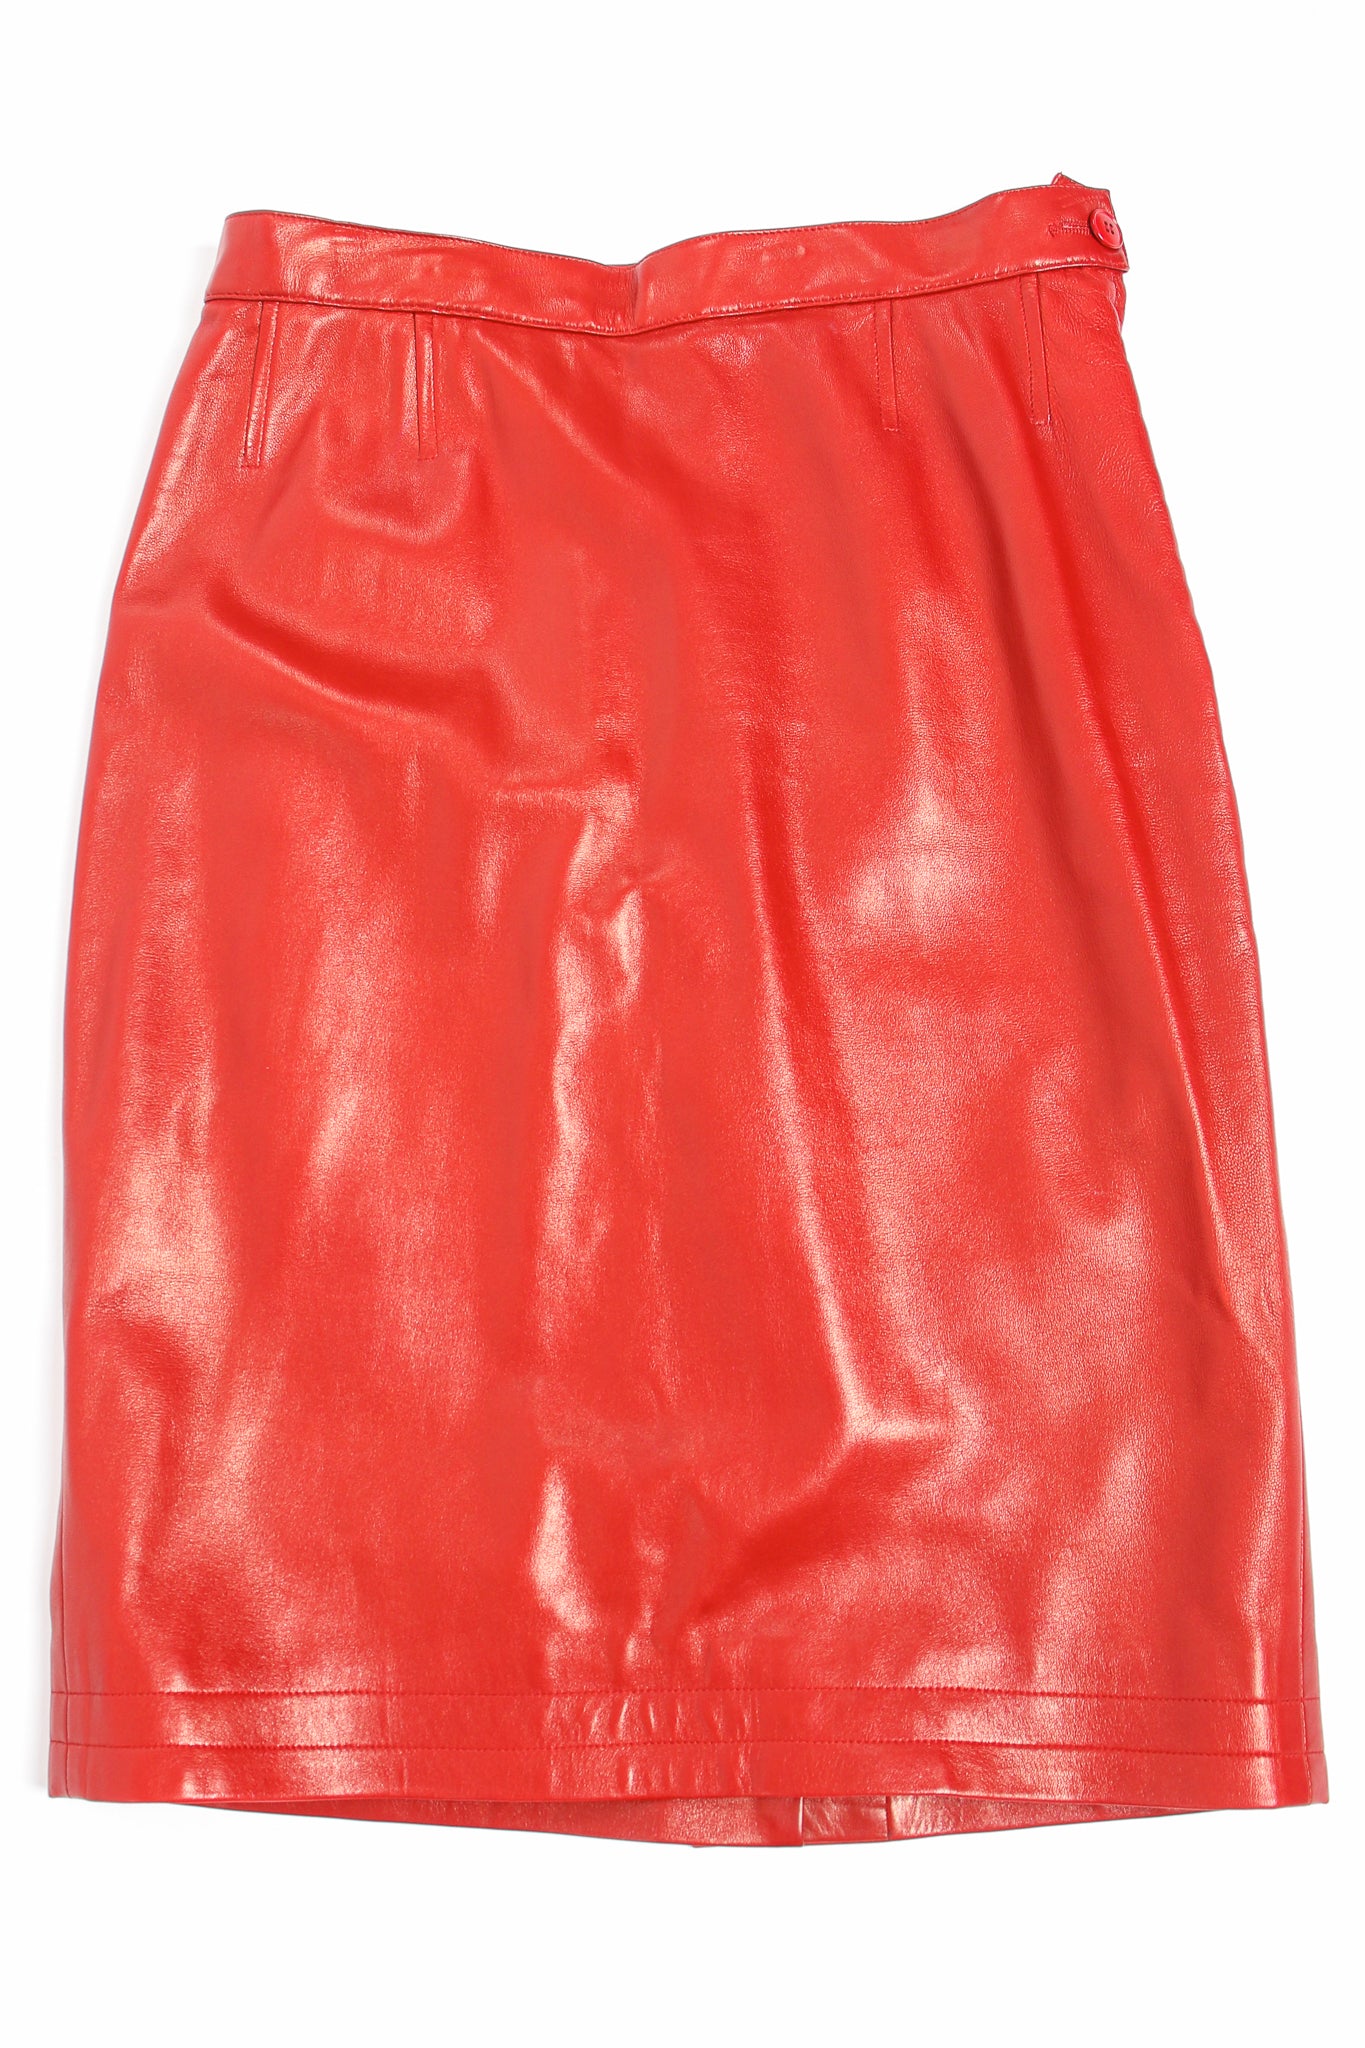 Vintage YSL Yves Saint Laurent 1988 Red Leather Skirt Suit skirt flat at Recess LA